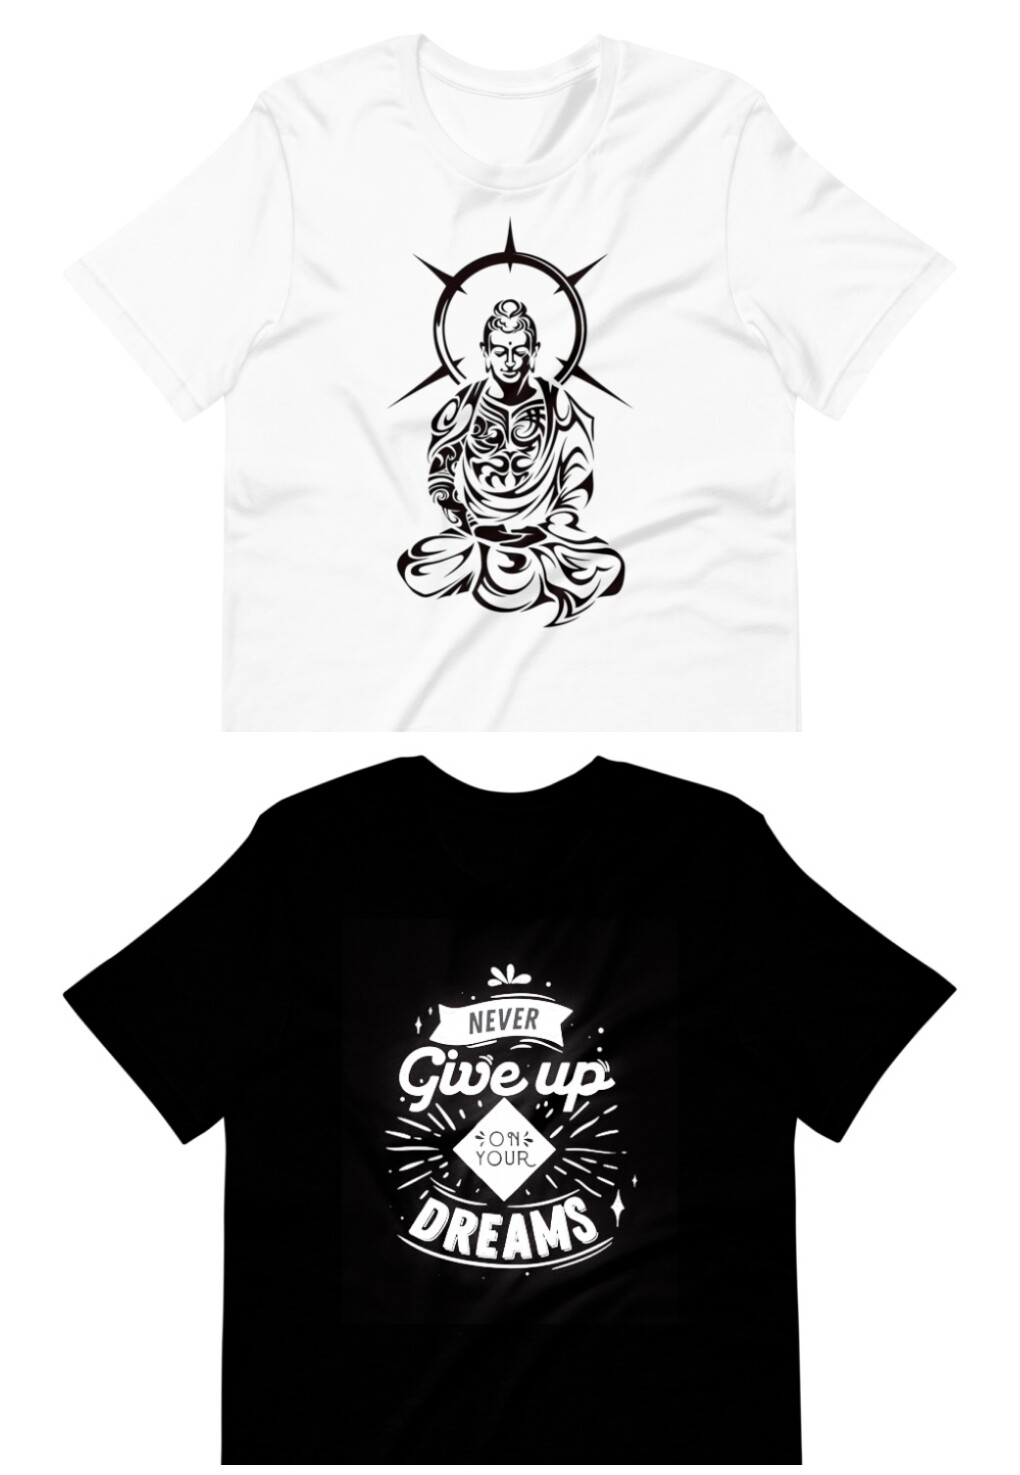 (2 Camisetas Oferta ) 1xCamiseta - Buda + 1xCamiseta - Never give up